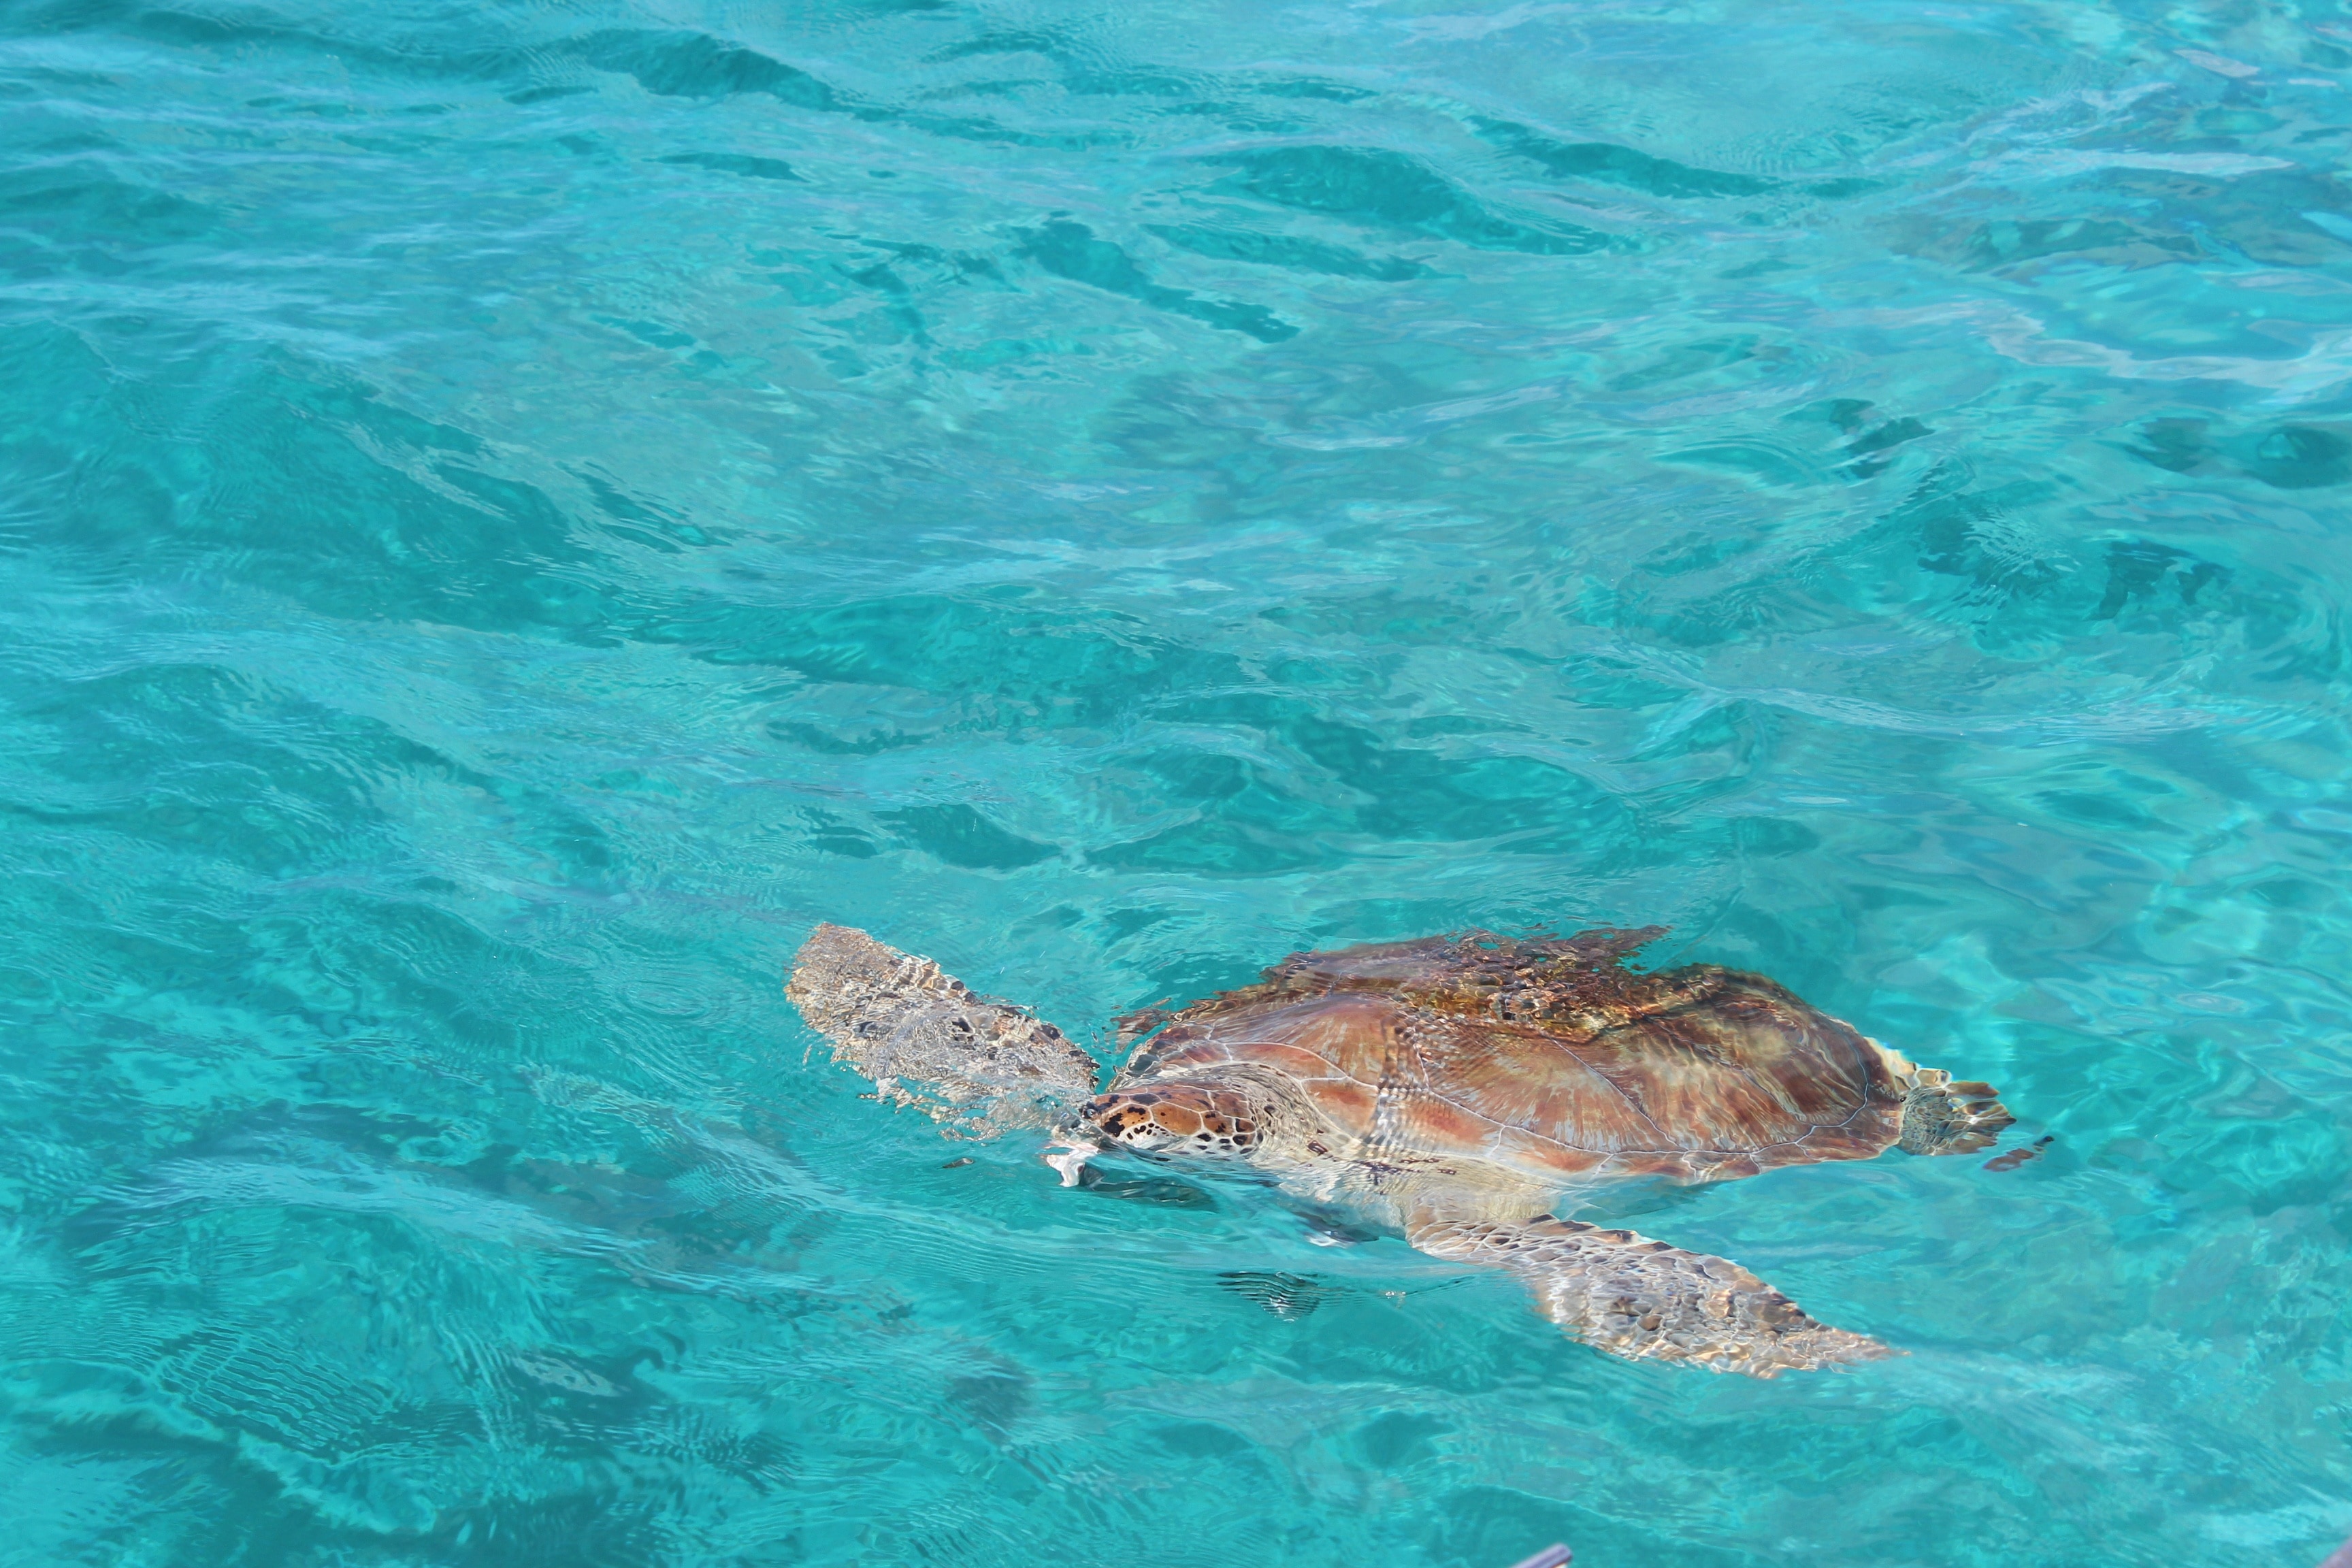 Mar, Caribbean, Turtle, one animal, animal themes